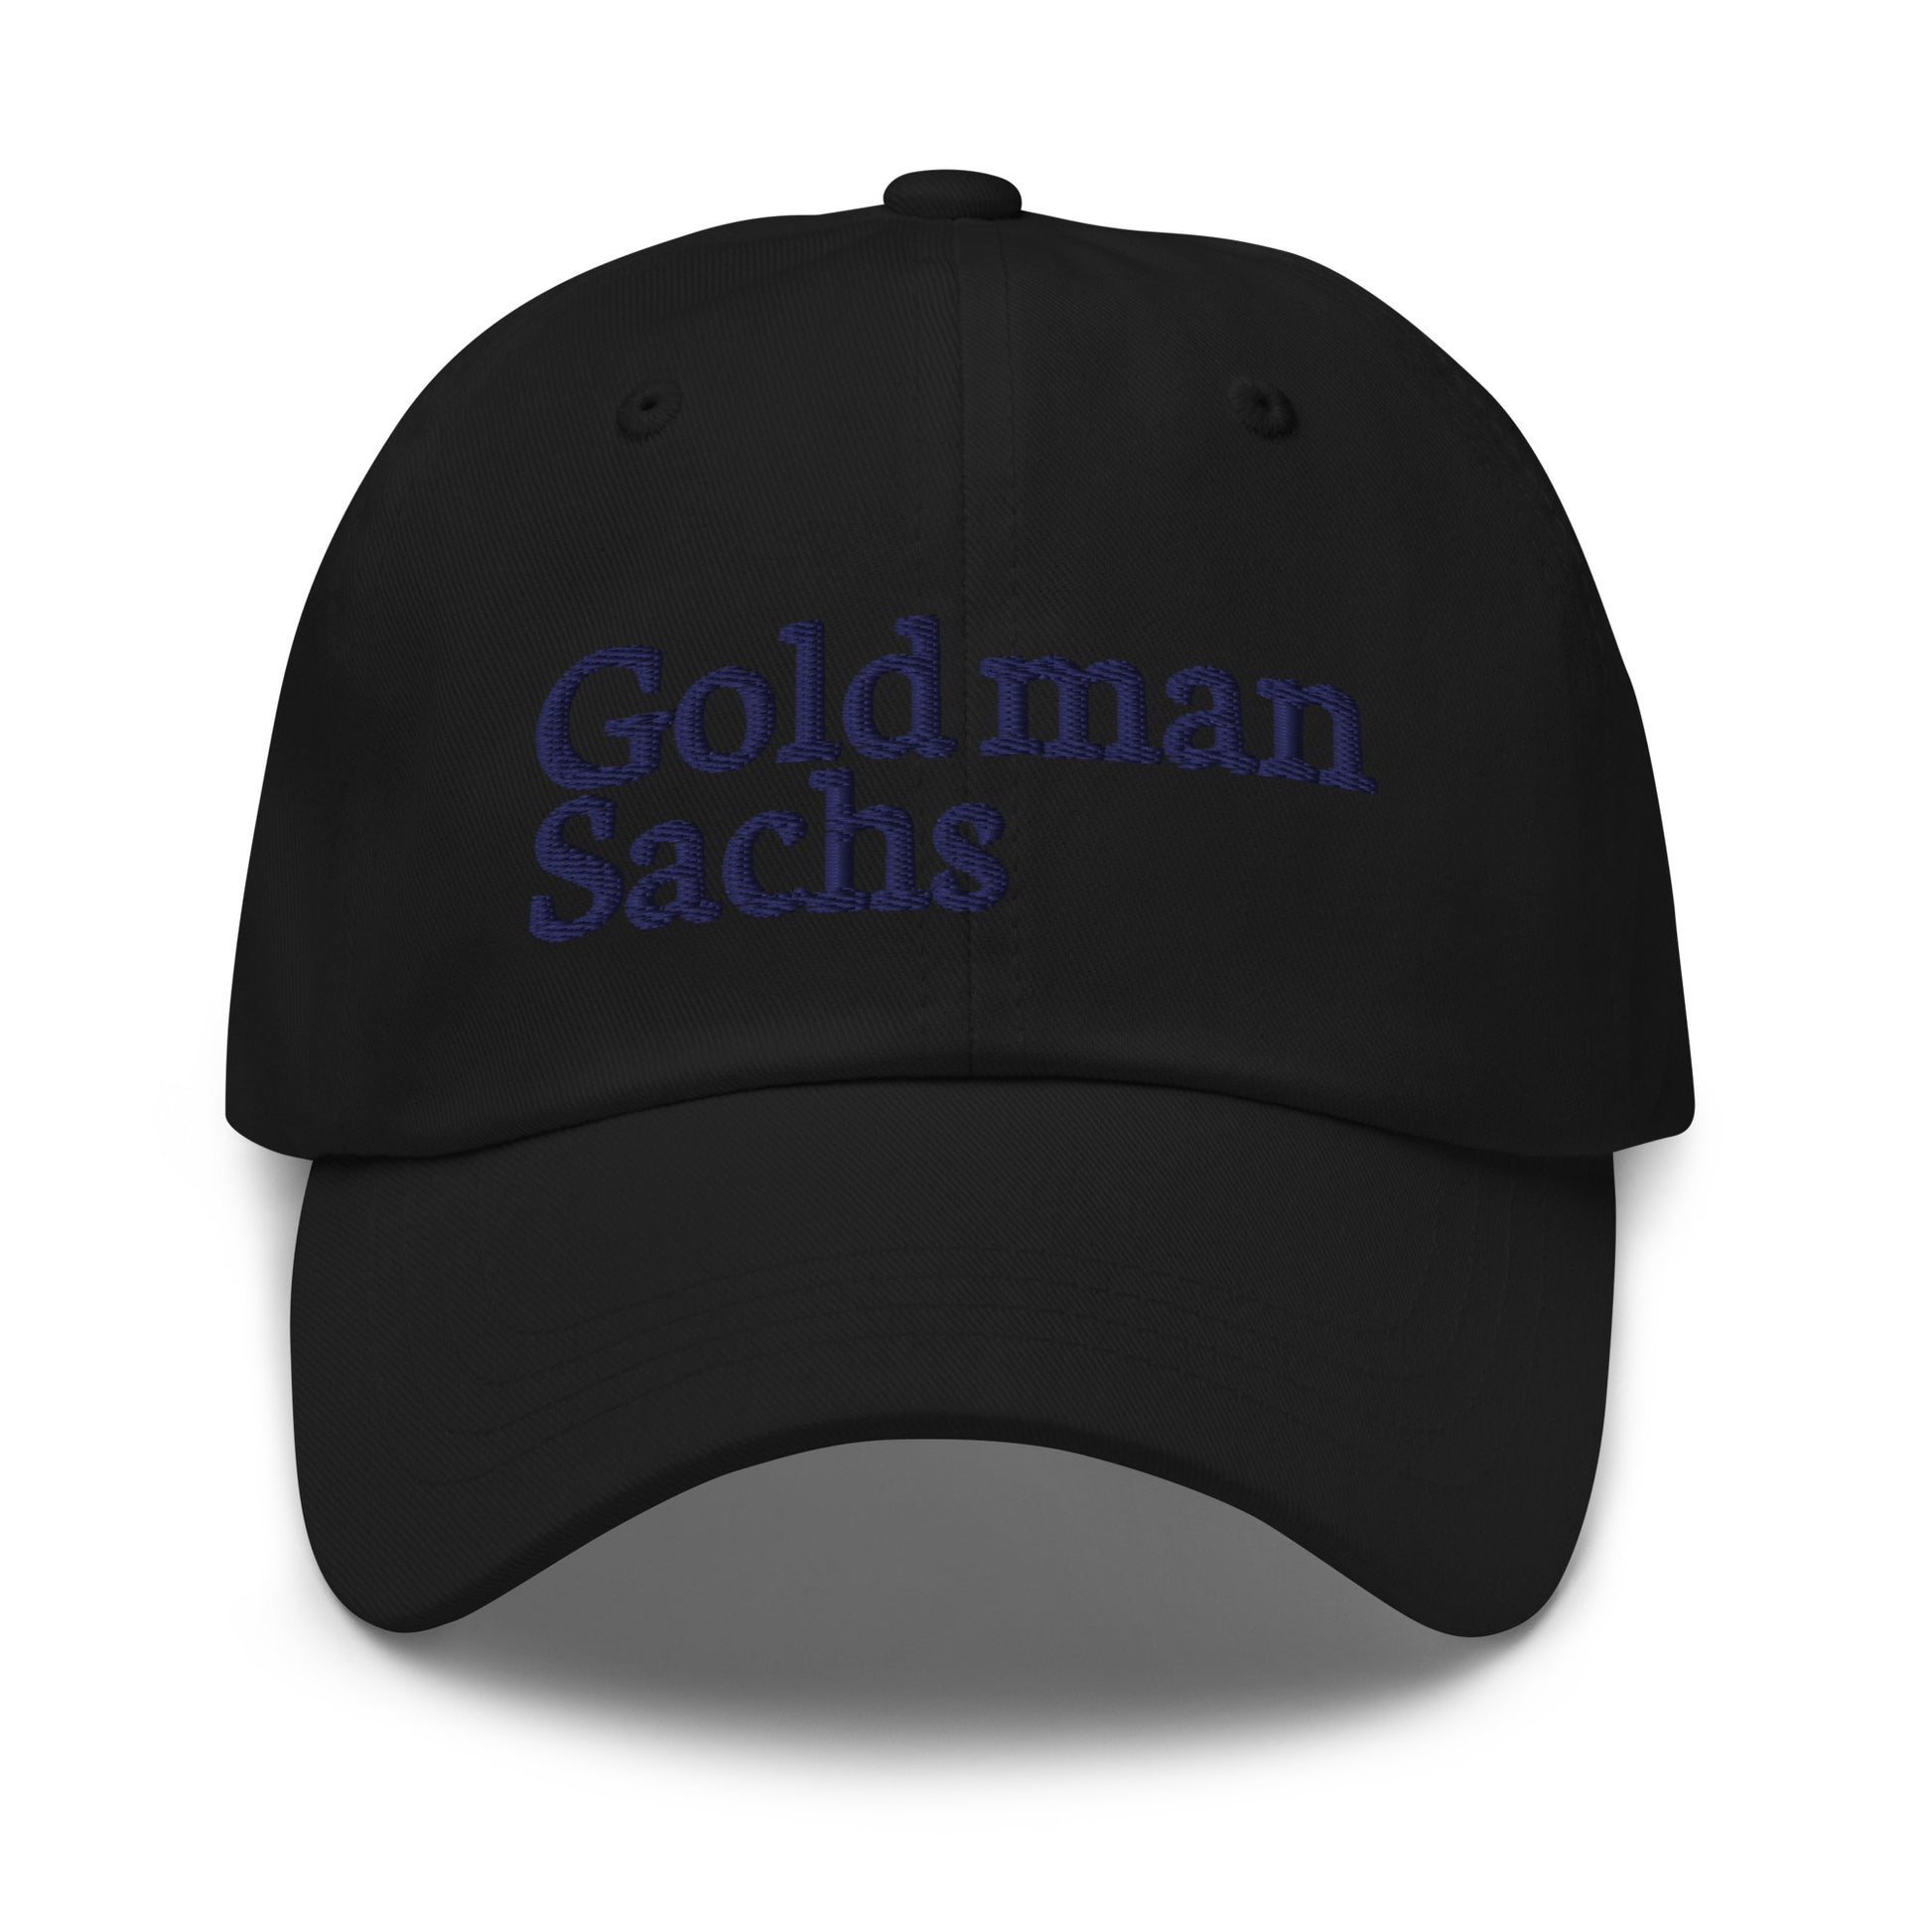 Gold Man Sachs Golf hat / Patrick Cantlay Dad hat